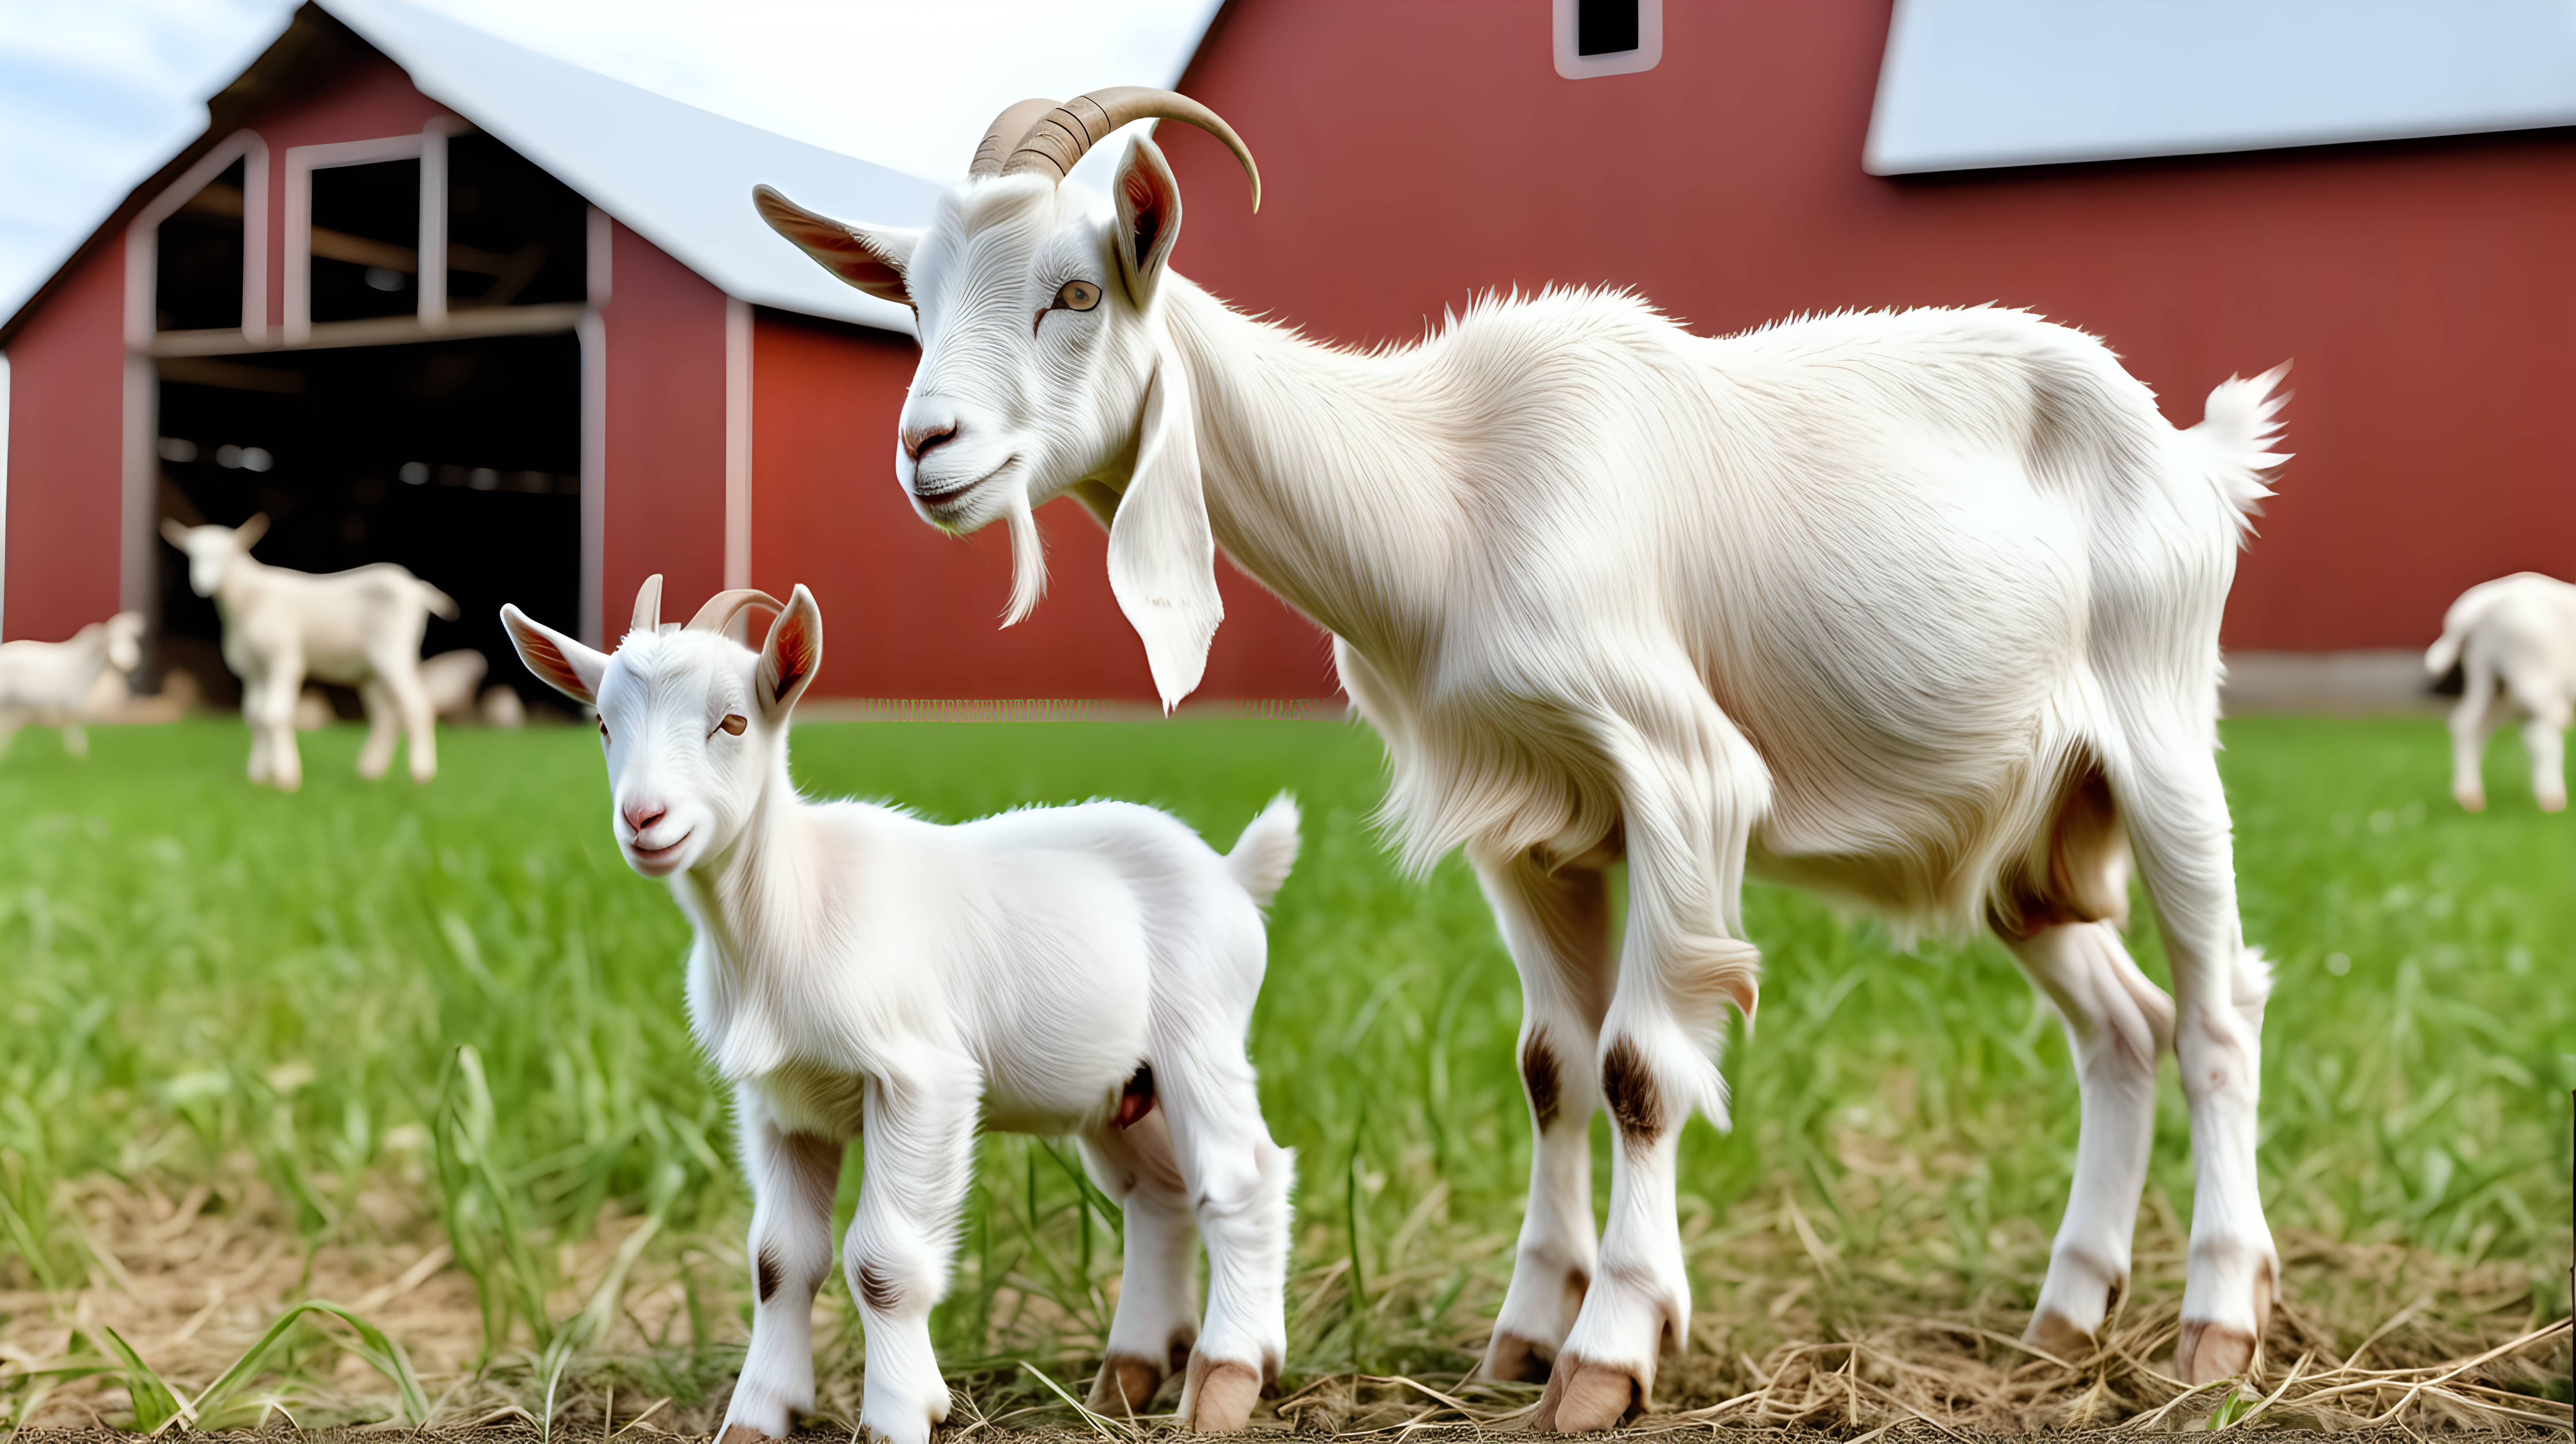 Goat kid with Goat in field farm barn